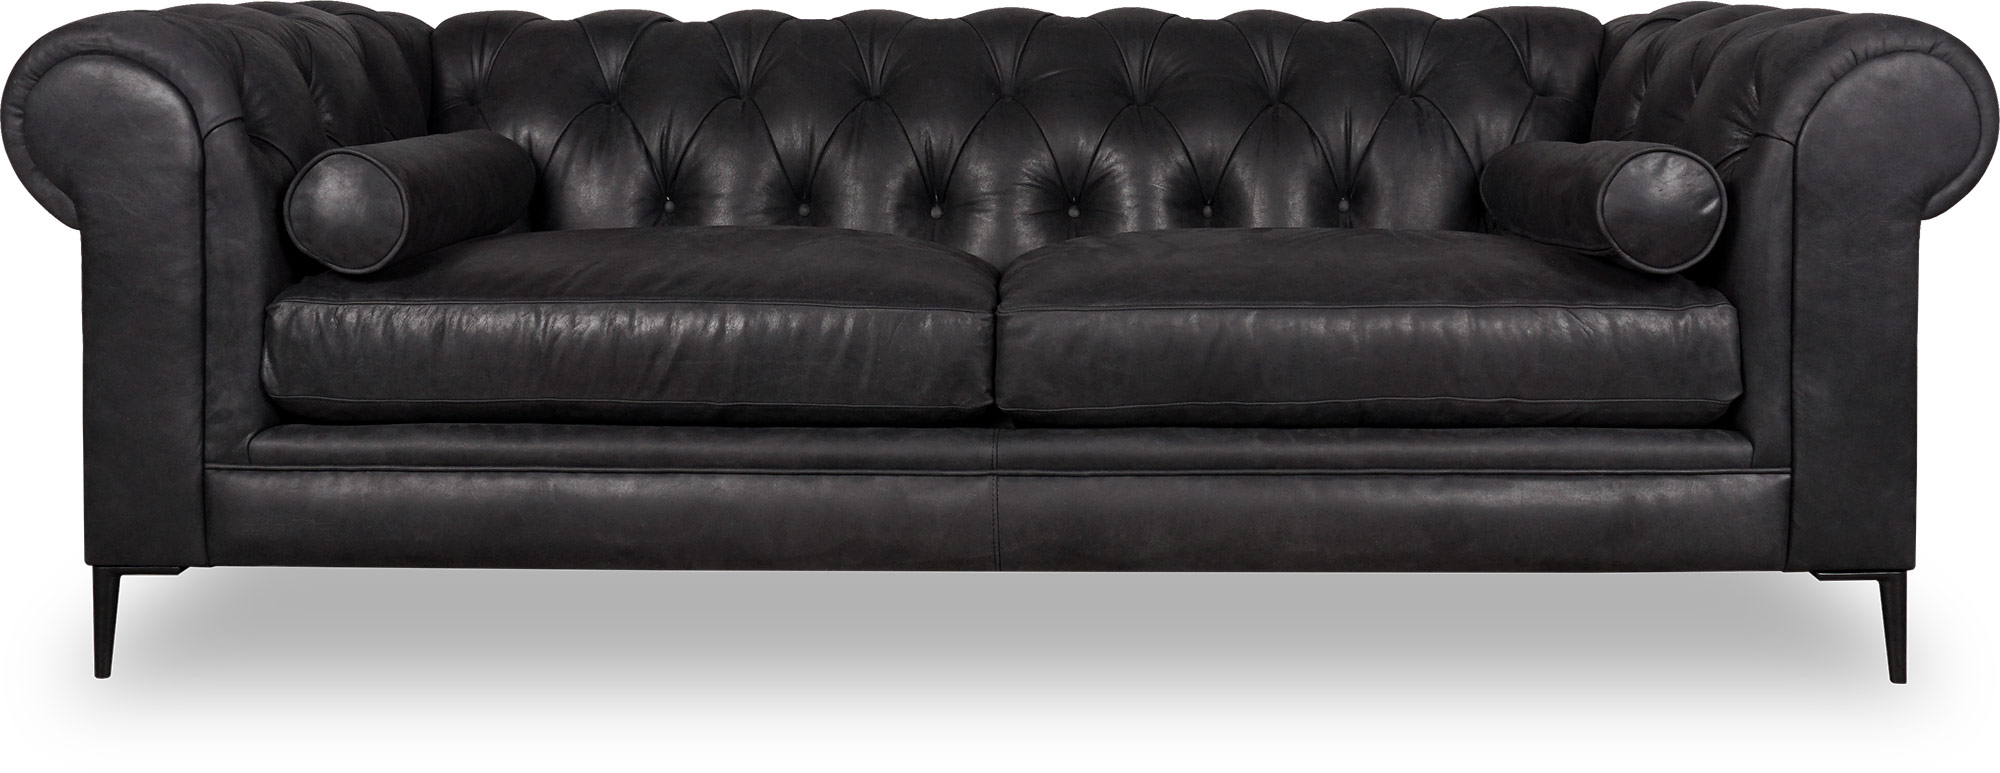 Eliza modern Chesterfield leather sofa